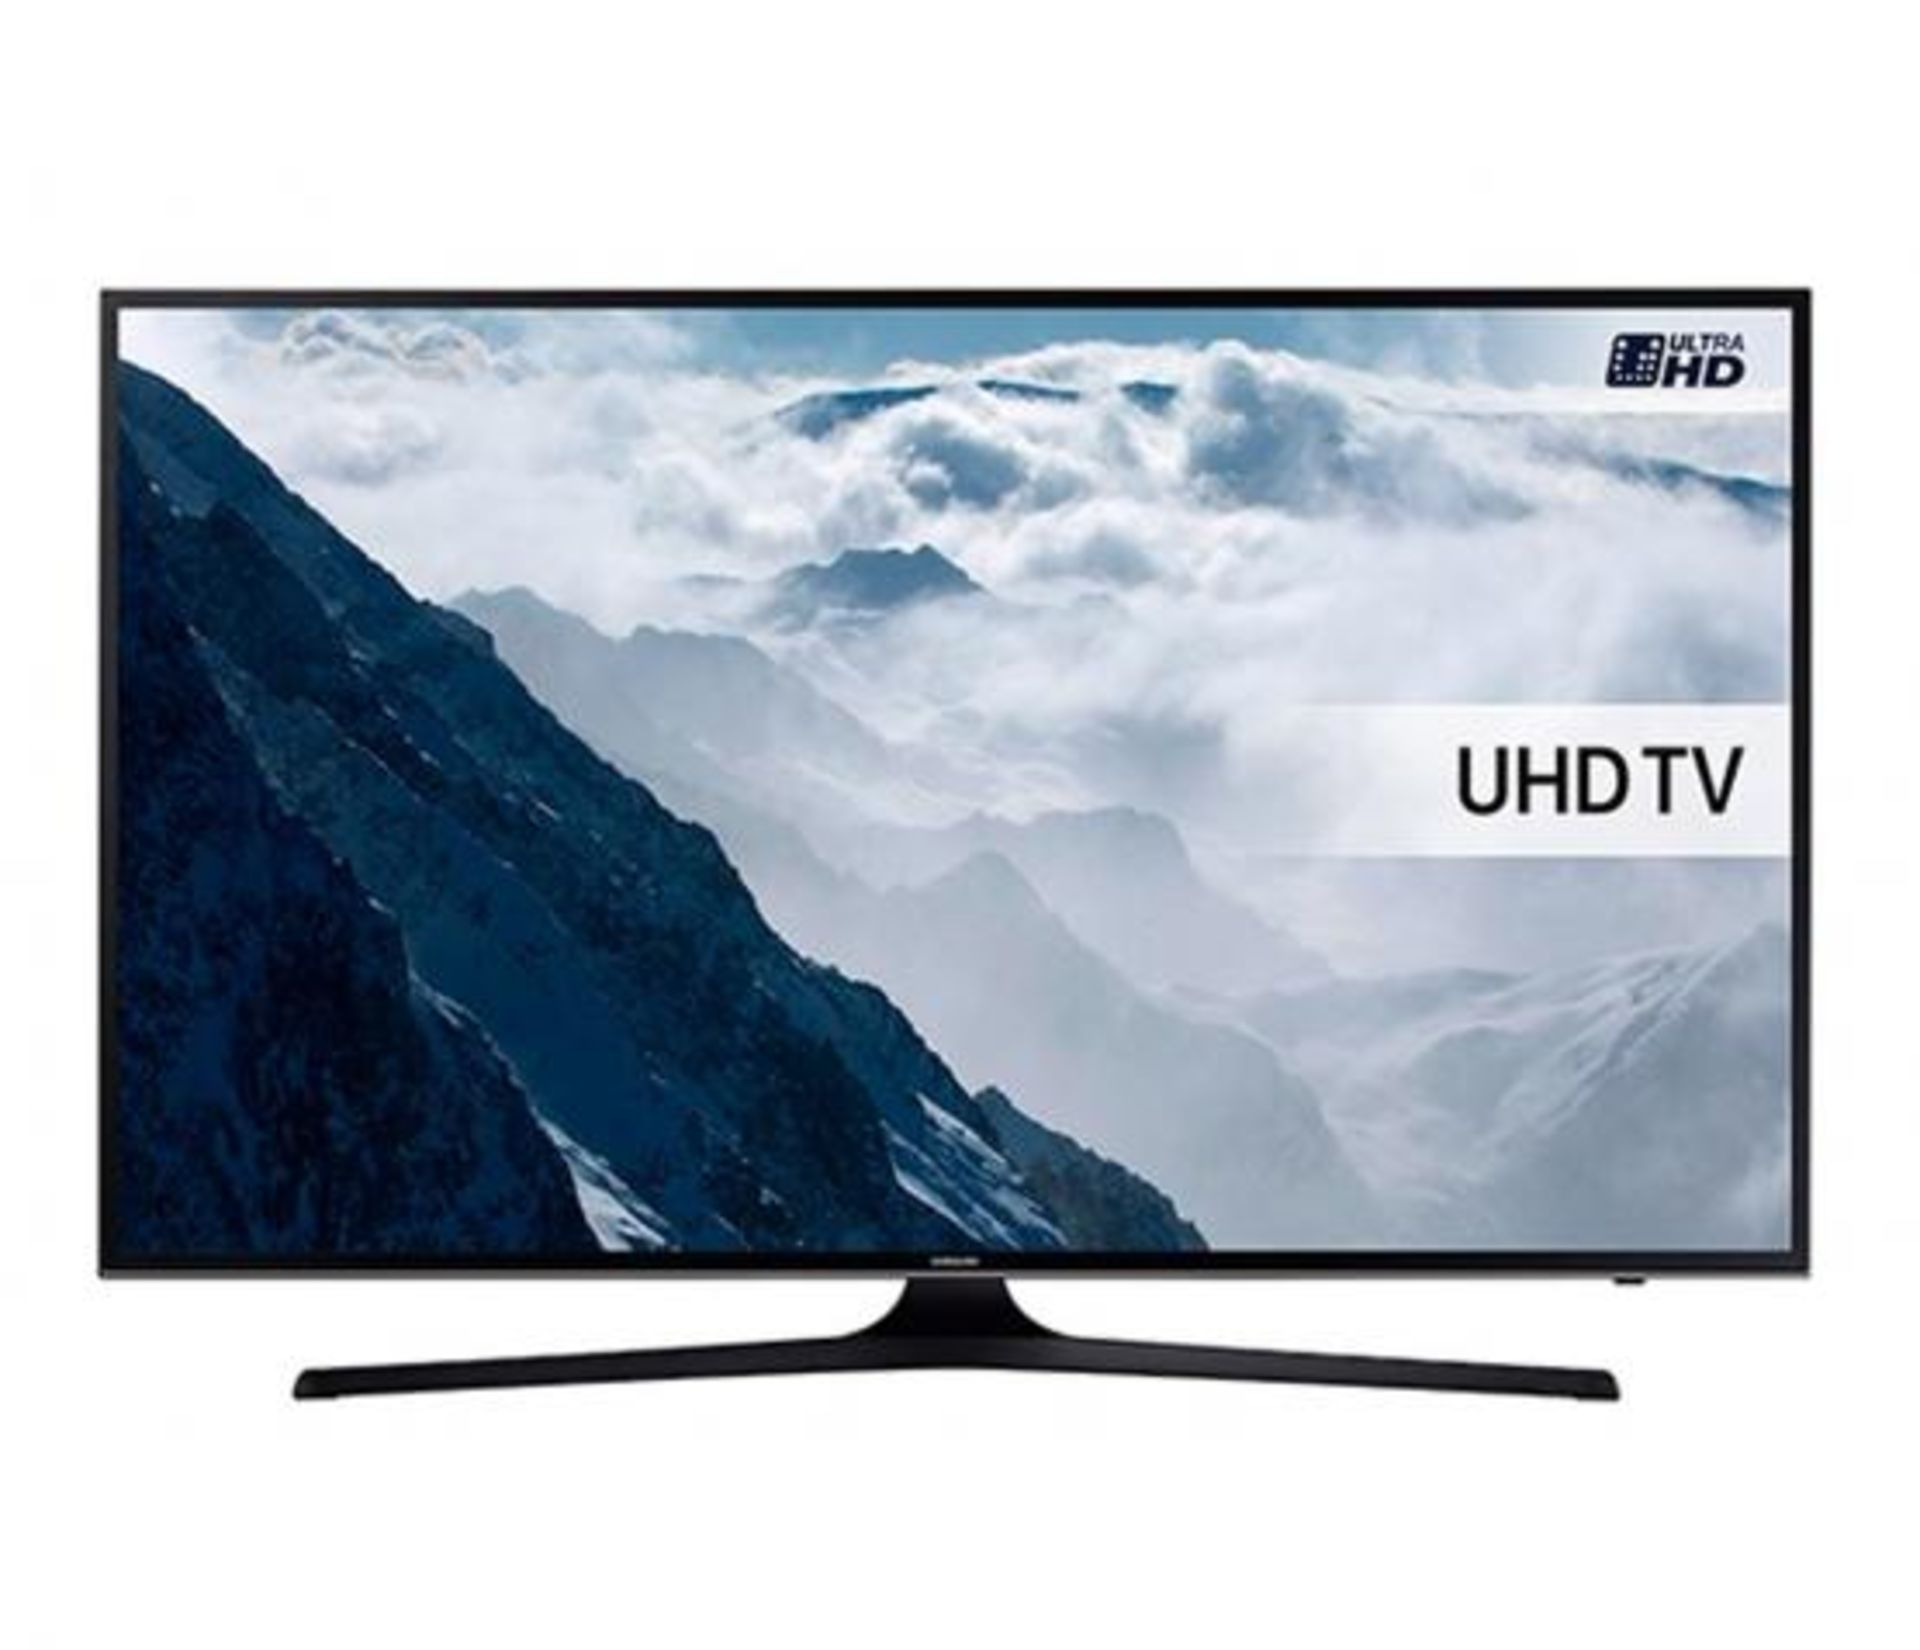 (T50) Samsung UE50KU6000 50 Inch UHD HDR Smart LED TV. RRP £699. Enjoy stunning brightness and